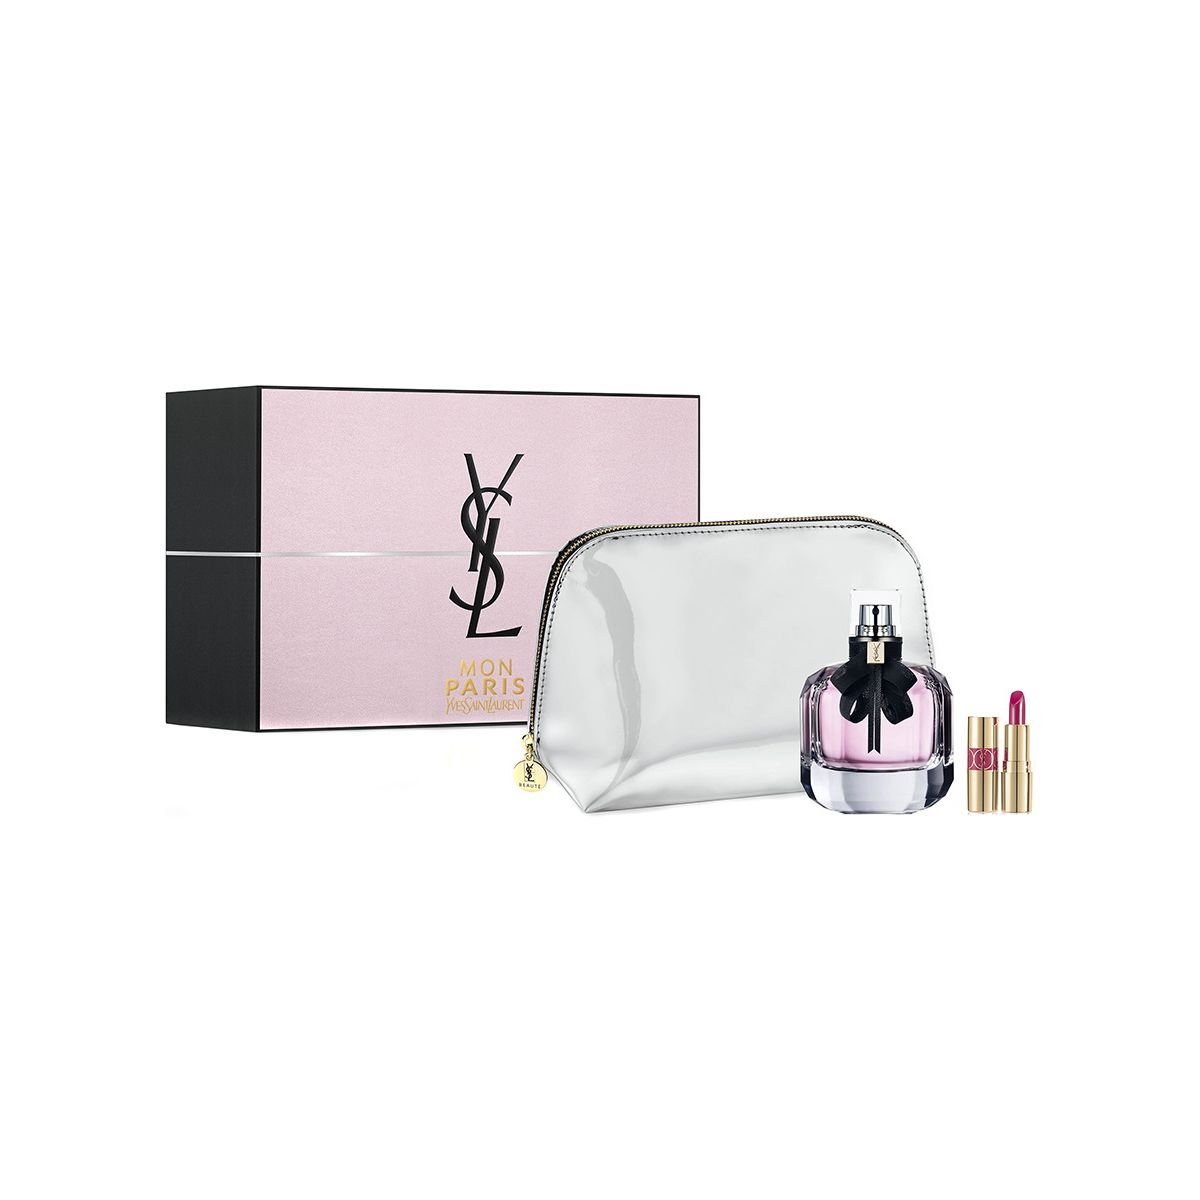 Yves Saint-Laurent - Mon Paris szett IX. eau de parfum parfüm hölgyeknek